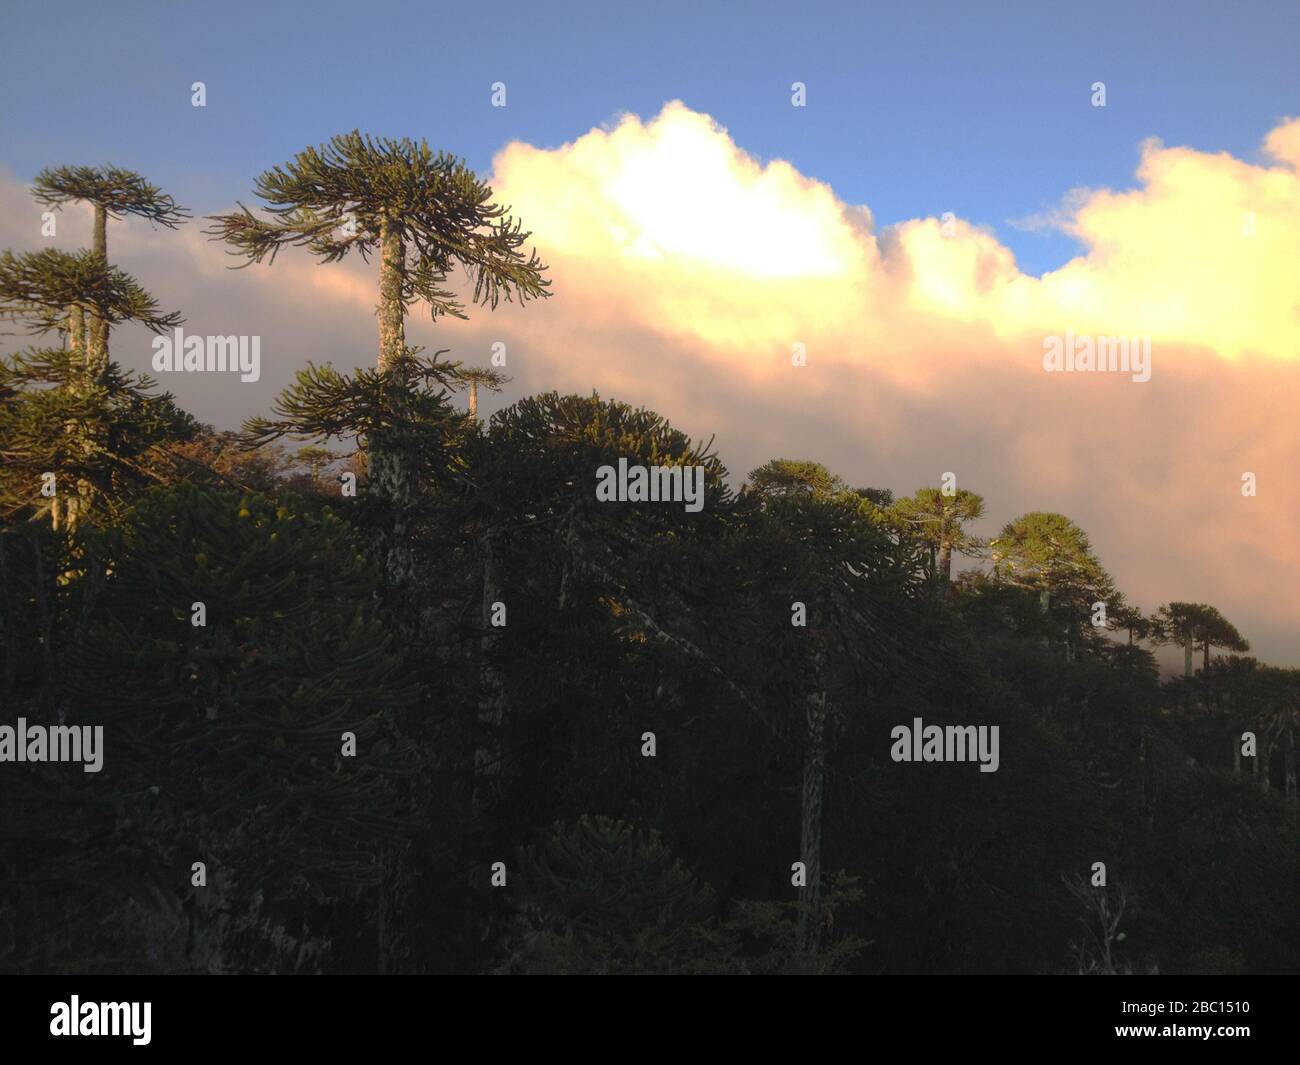 Monkey puzzle tree (Araucaria araucana) native forests at Nahuelbuta national park, Southern Chile Stock Photo